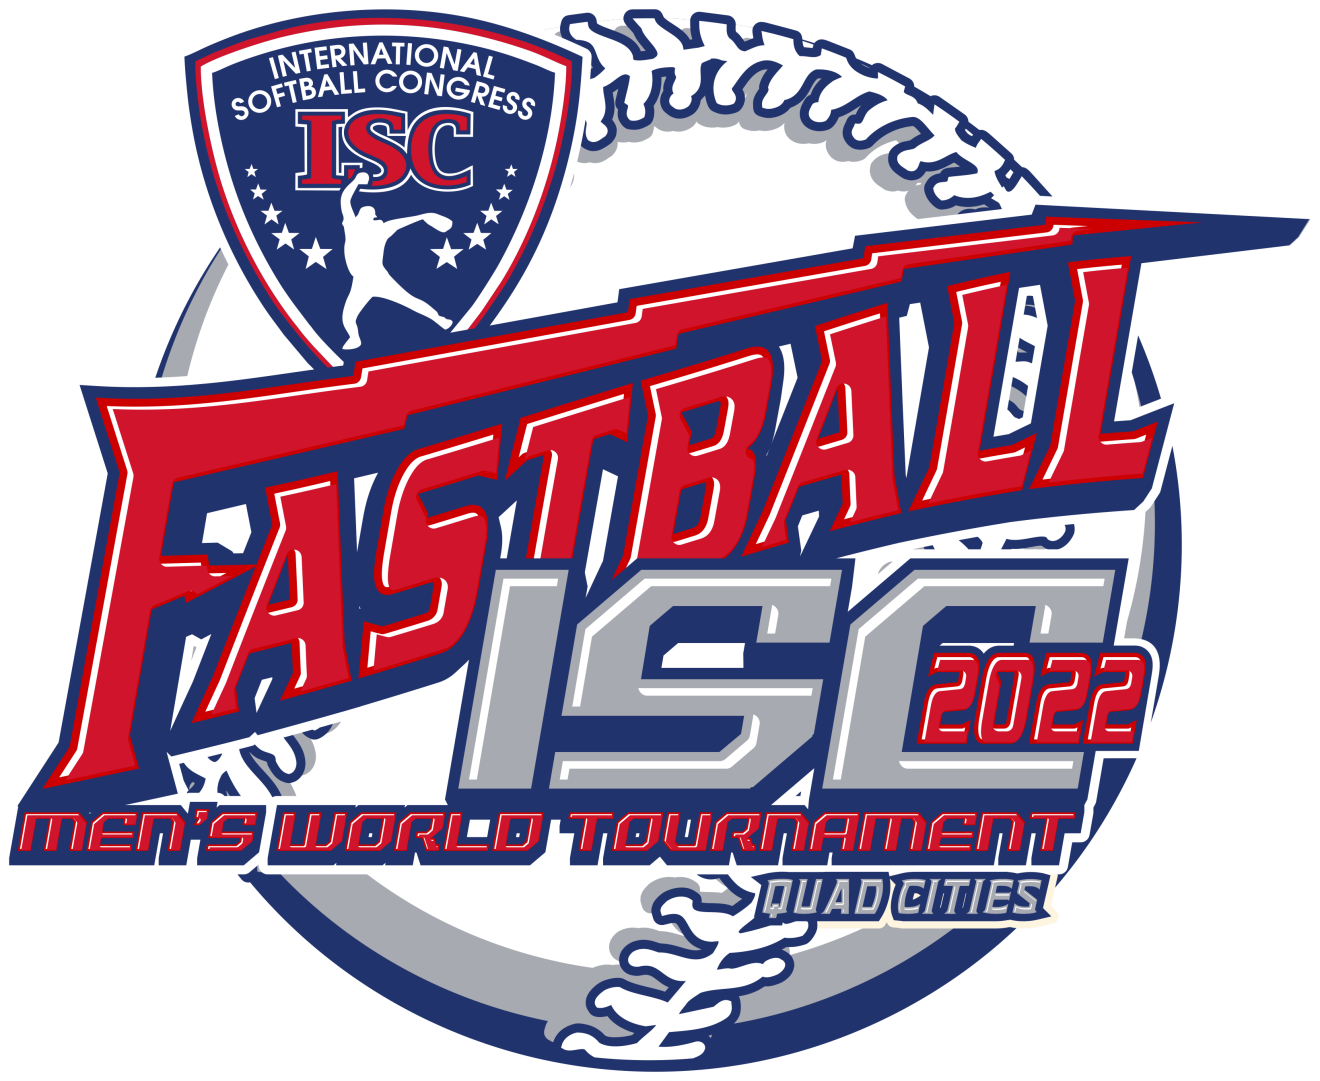 International Softball Congress Fastball World Championships Hit Illinois This Week